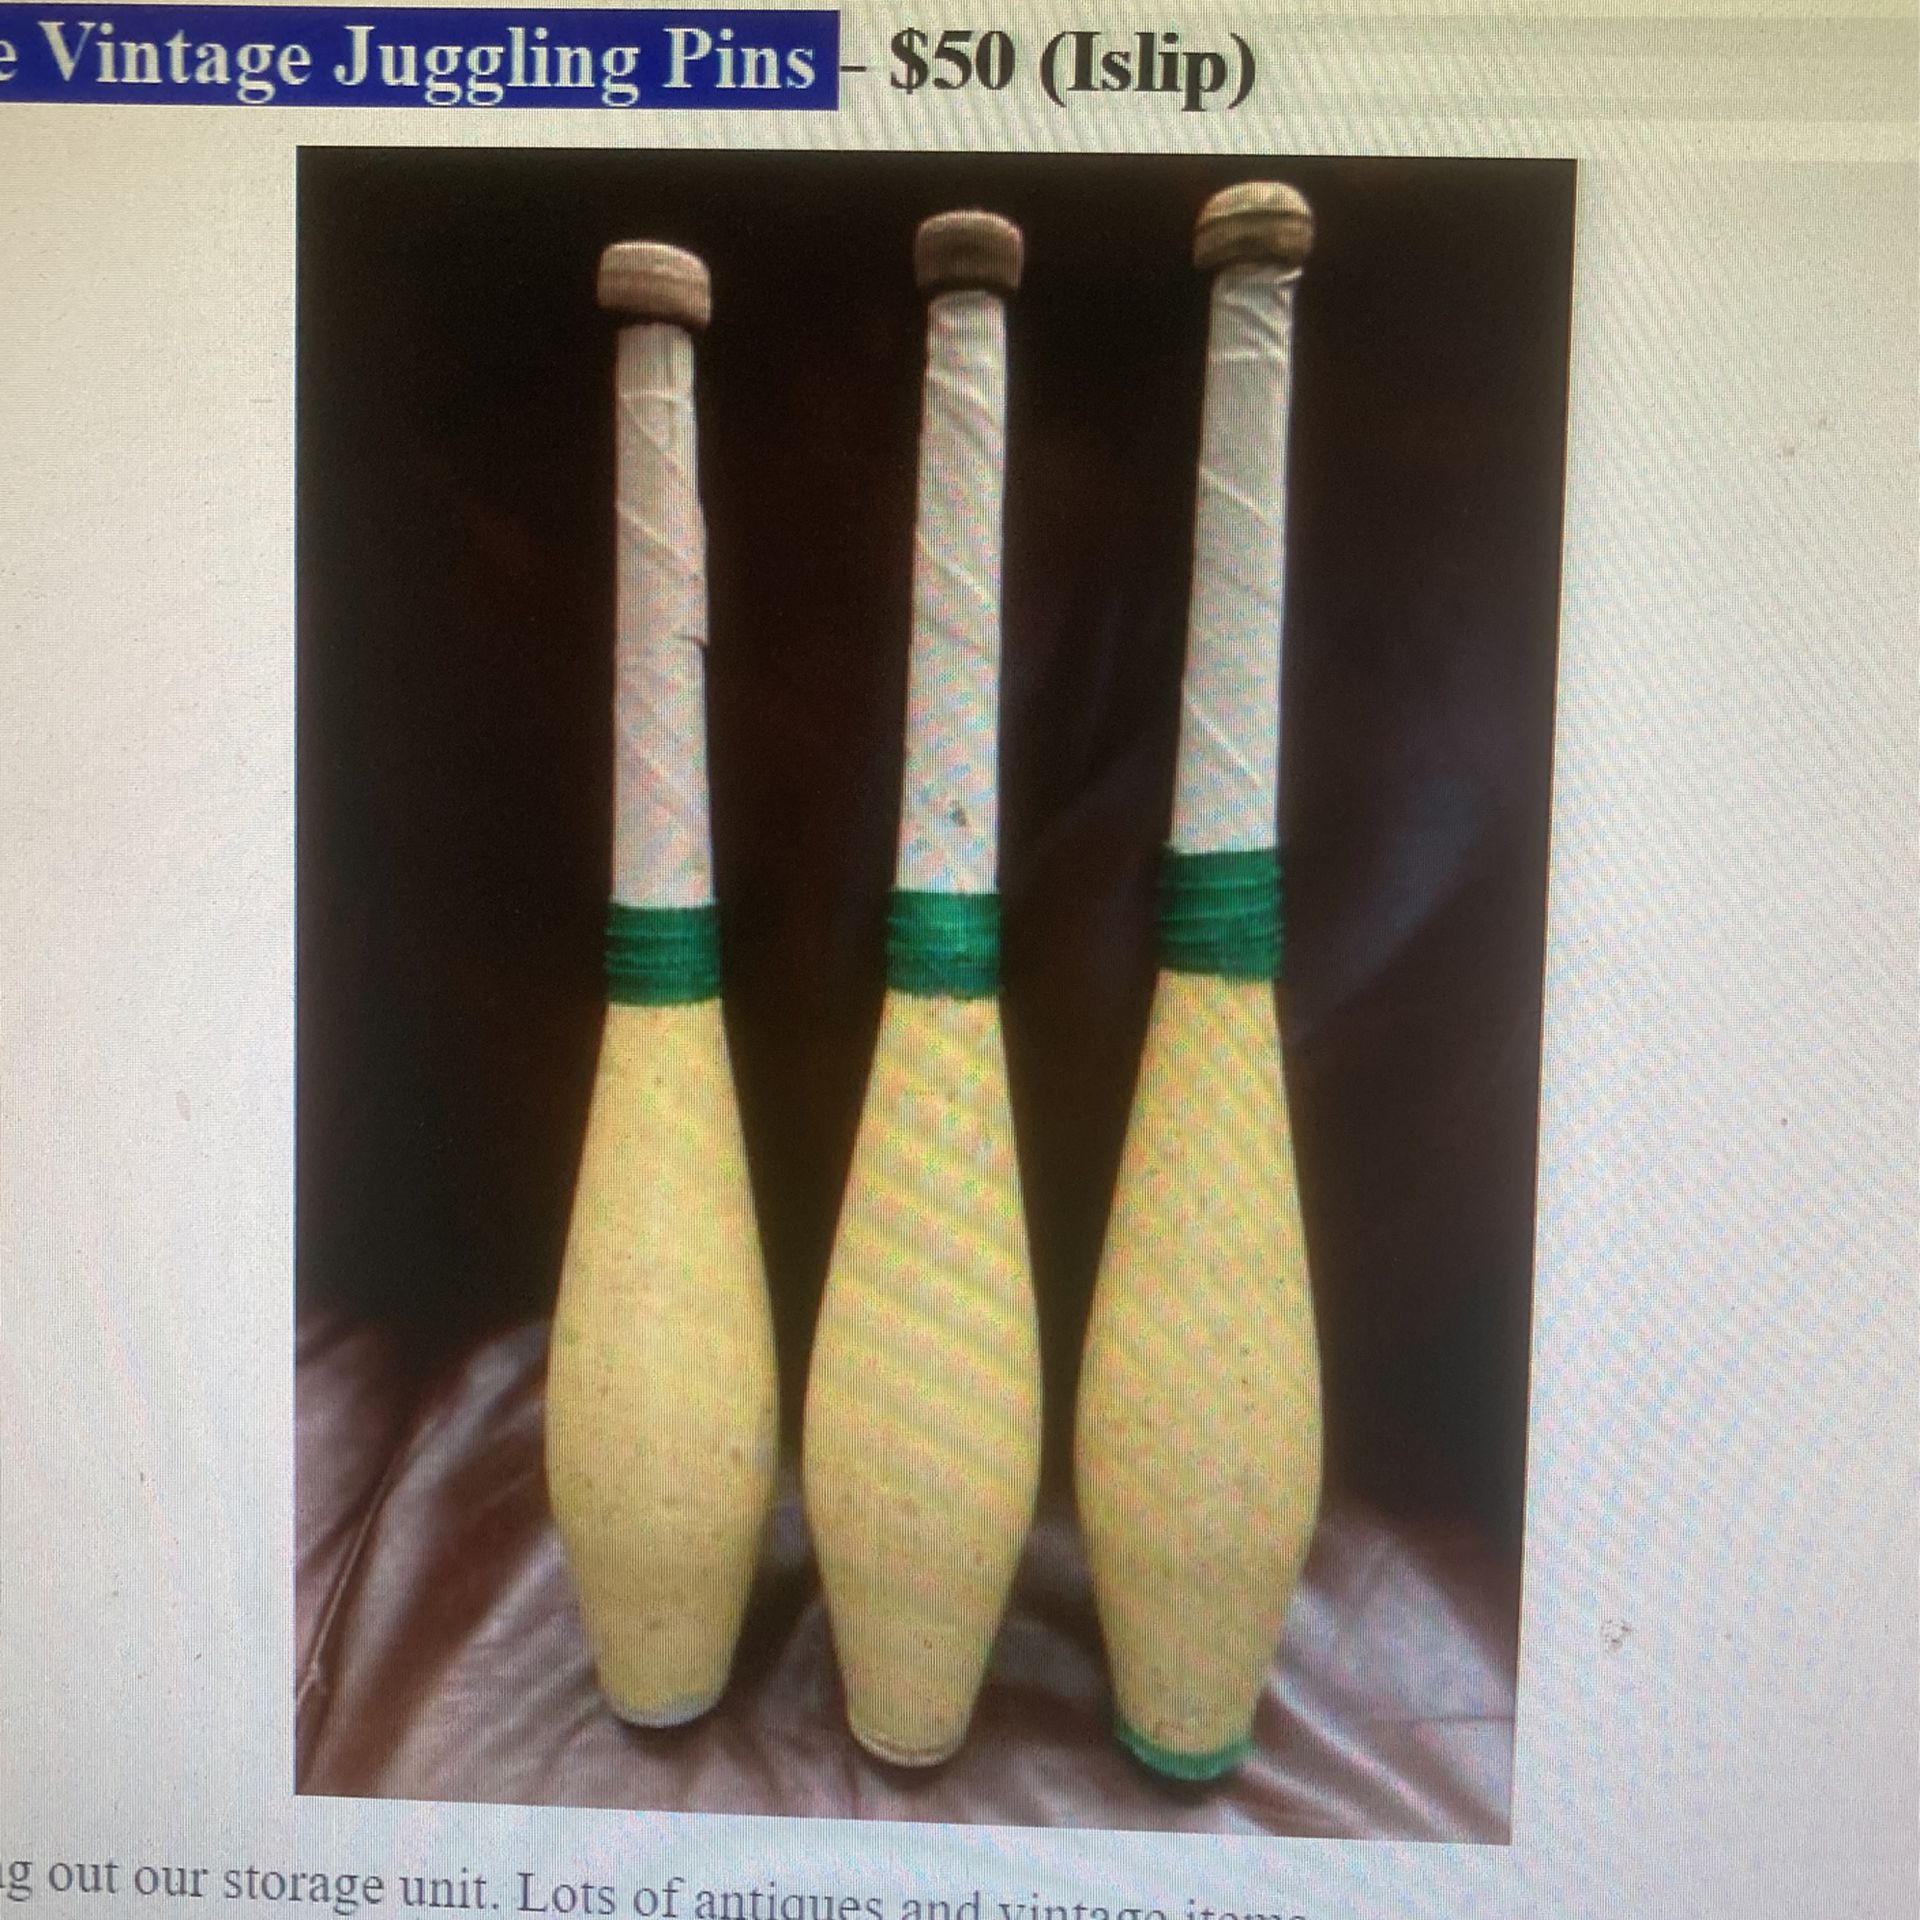 Three Vintage Juggling Pins